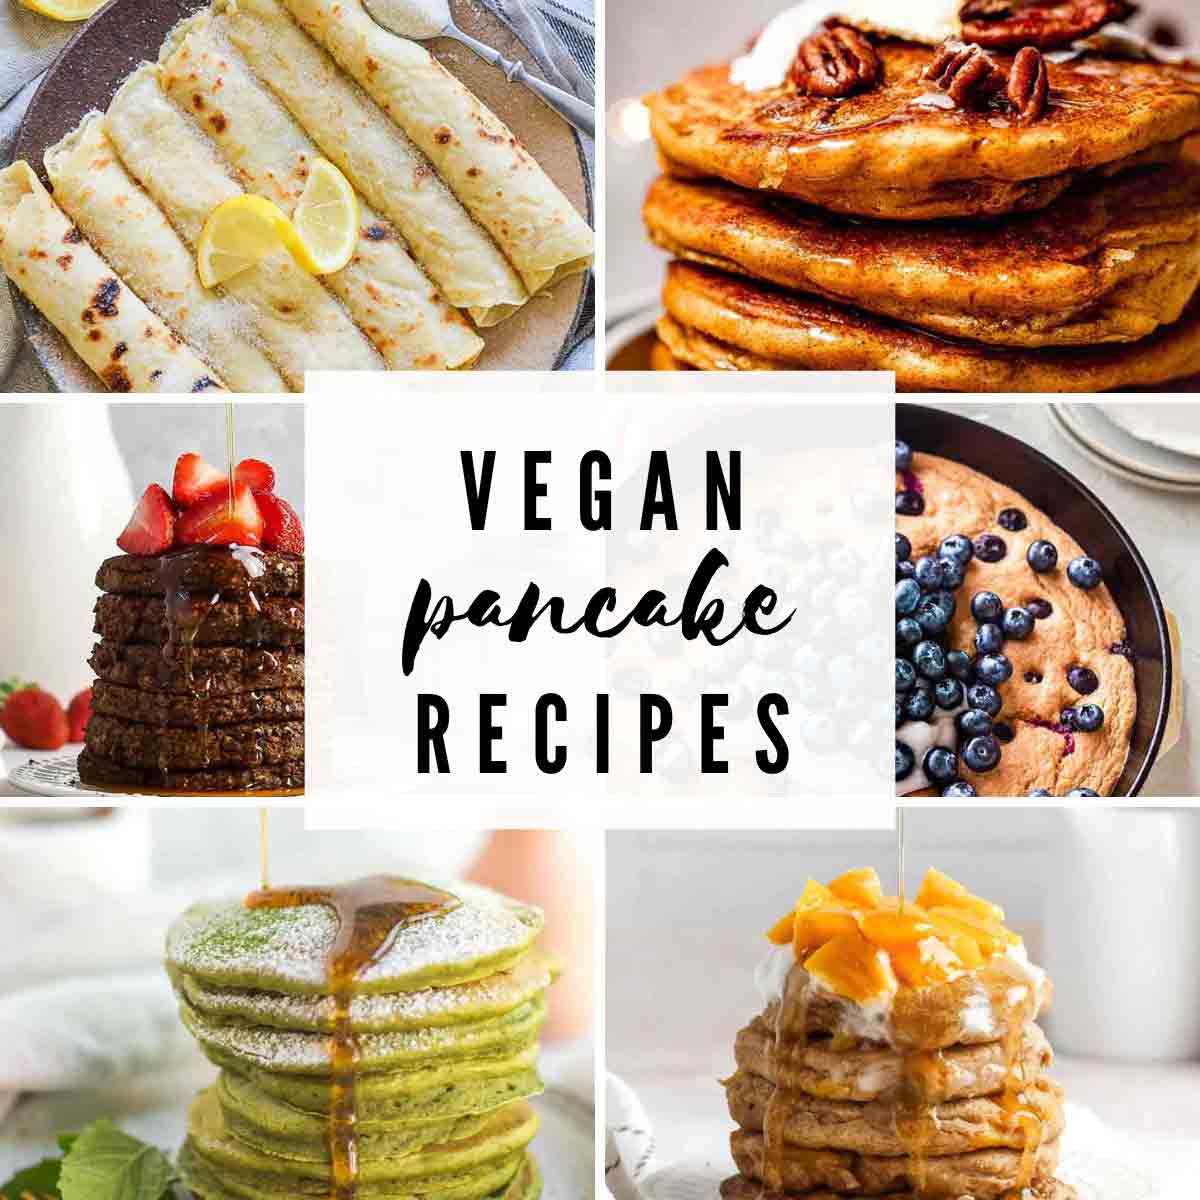 Pancake Images With Text Overlay That Reads 'vegan Pancake Recipes'